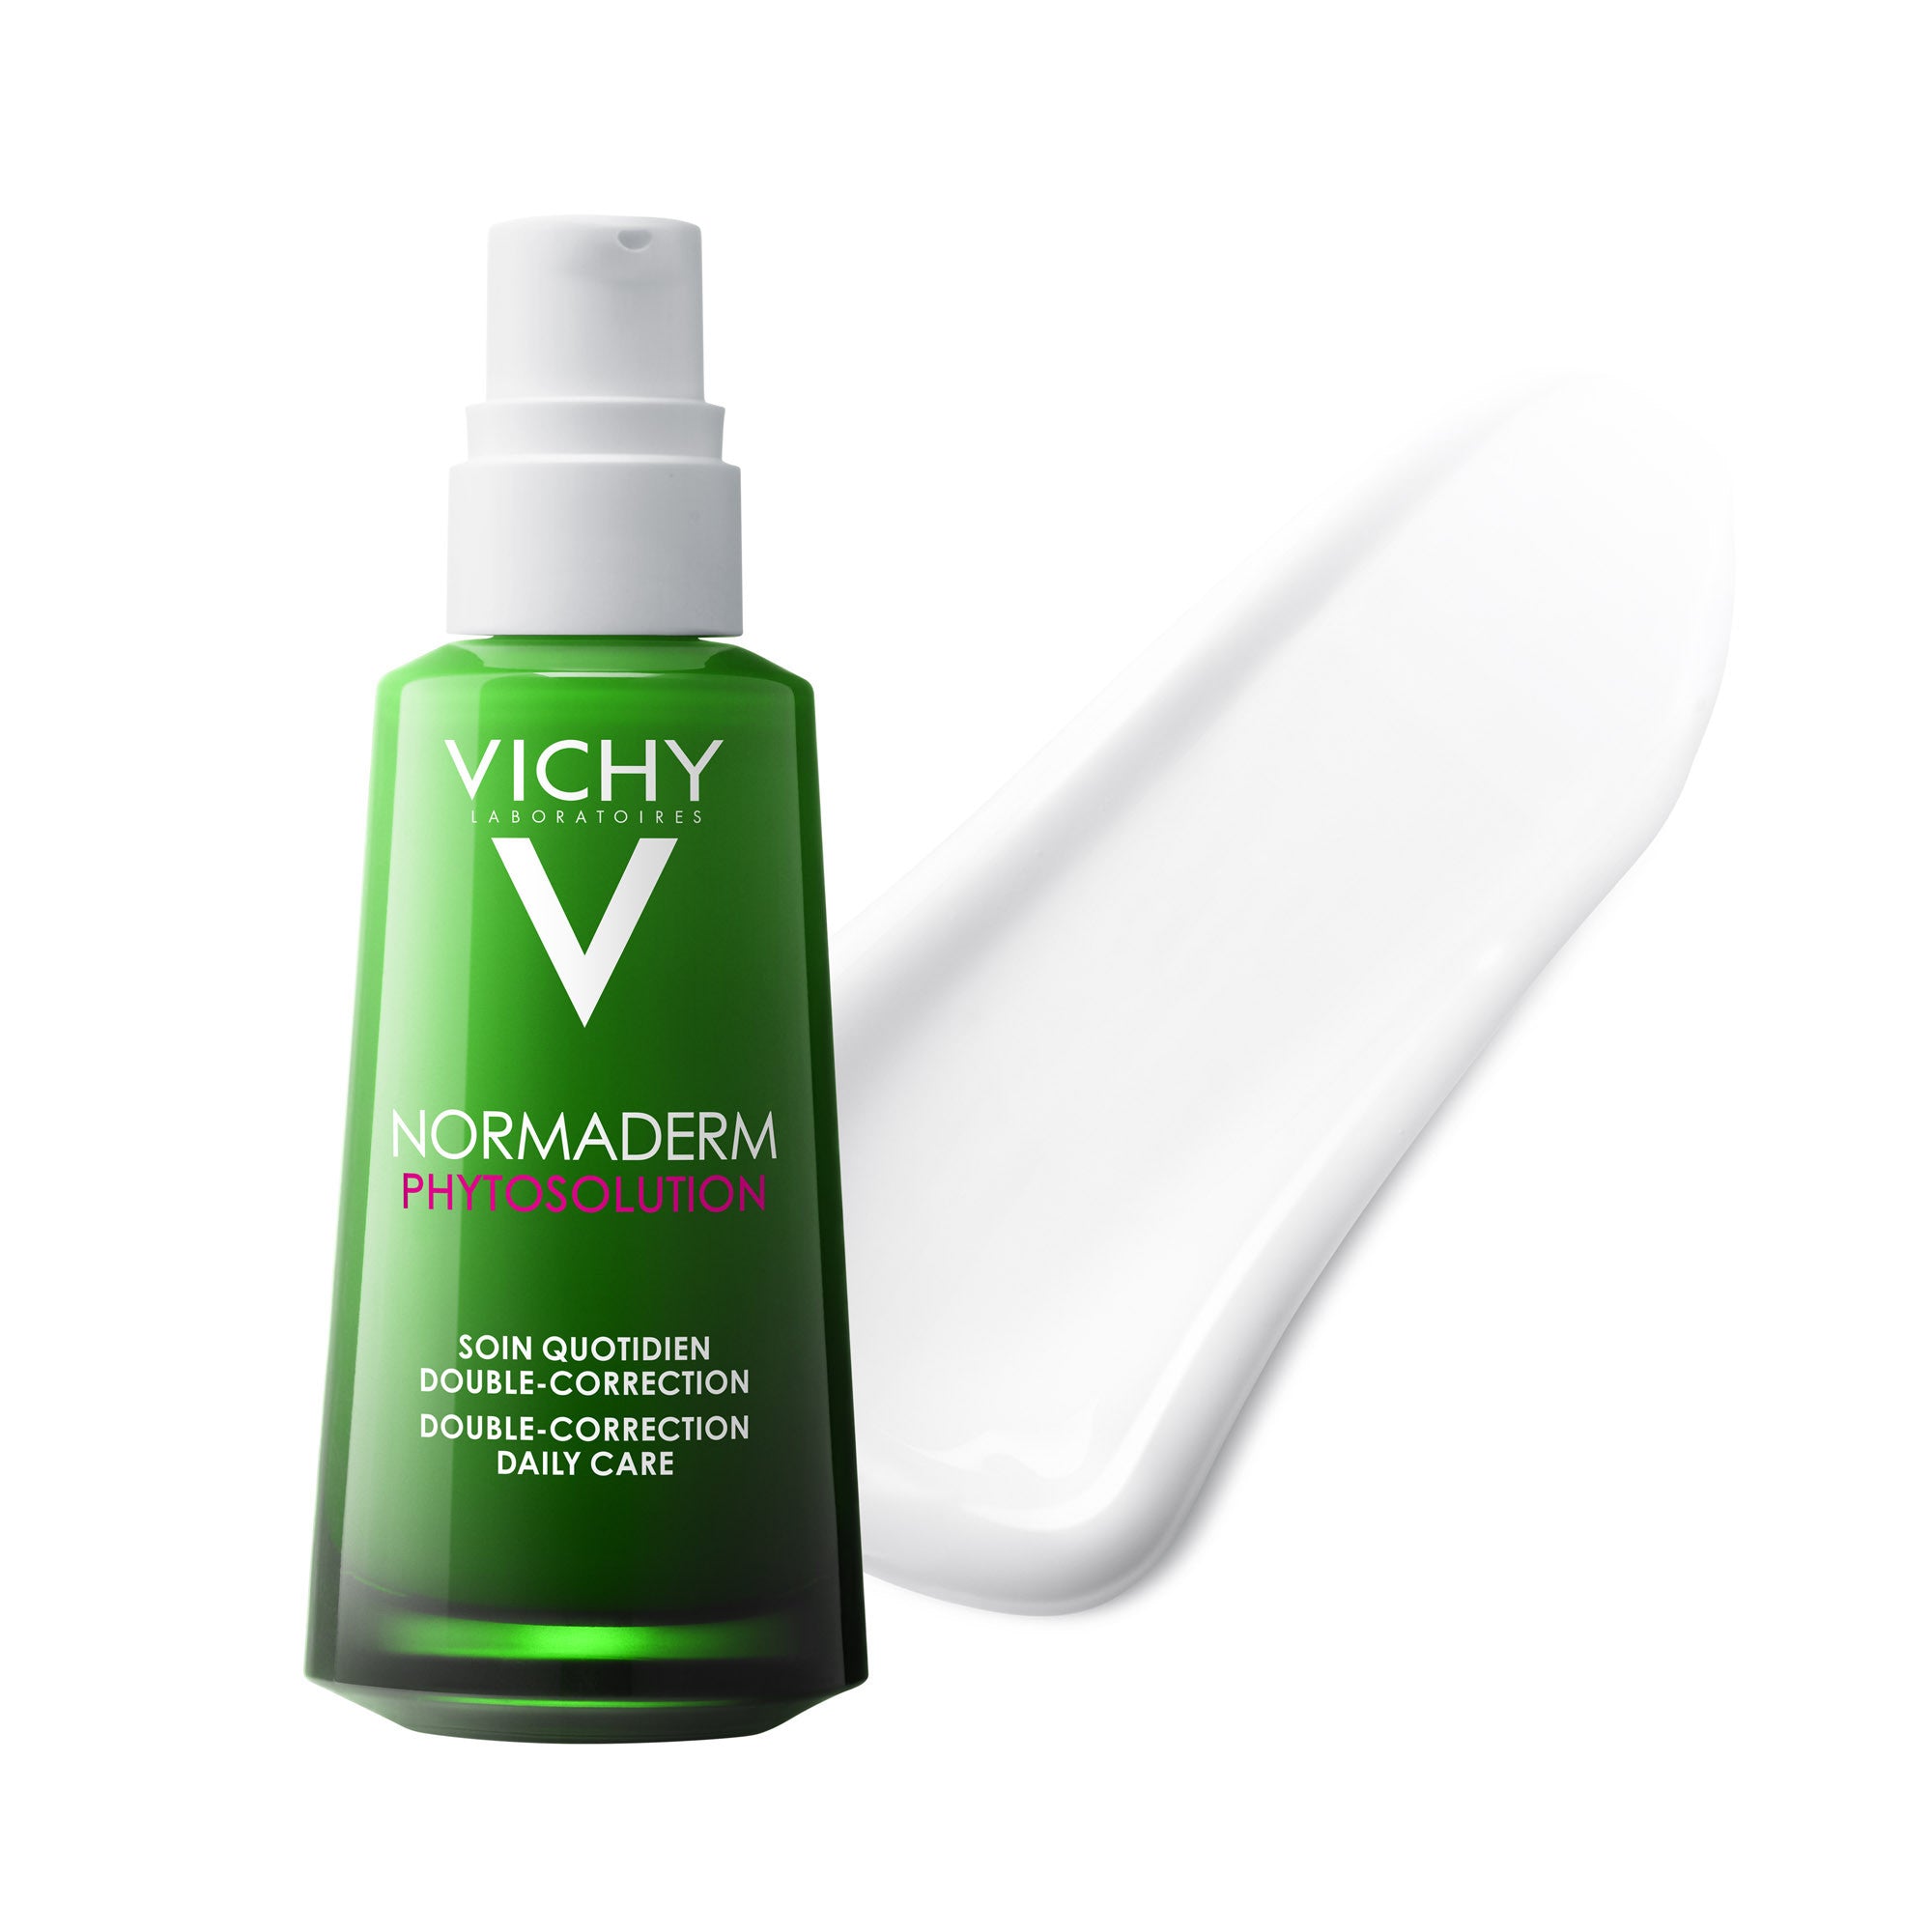 Vichy Normaderm Phytosolution dagcrème 50ml